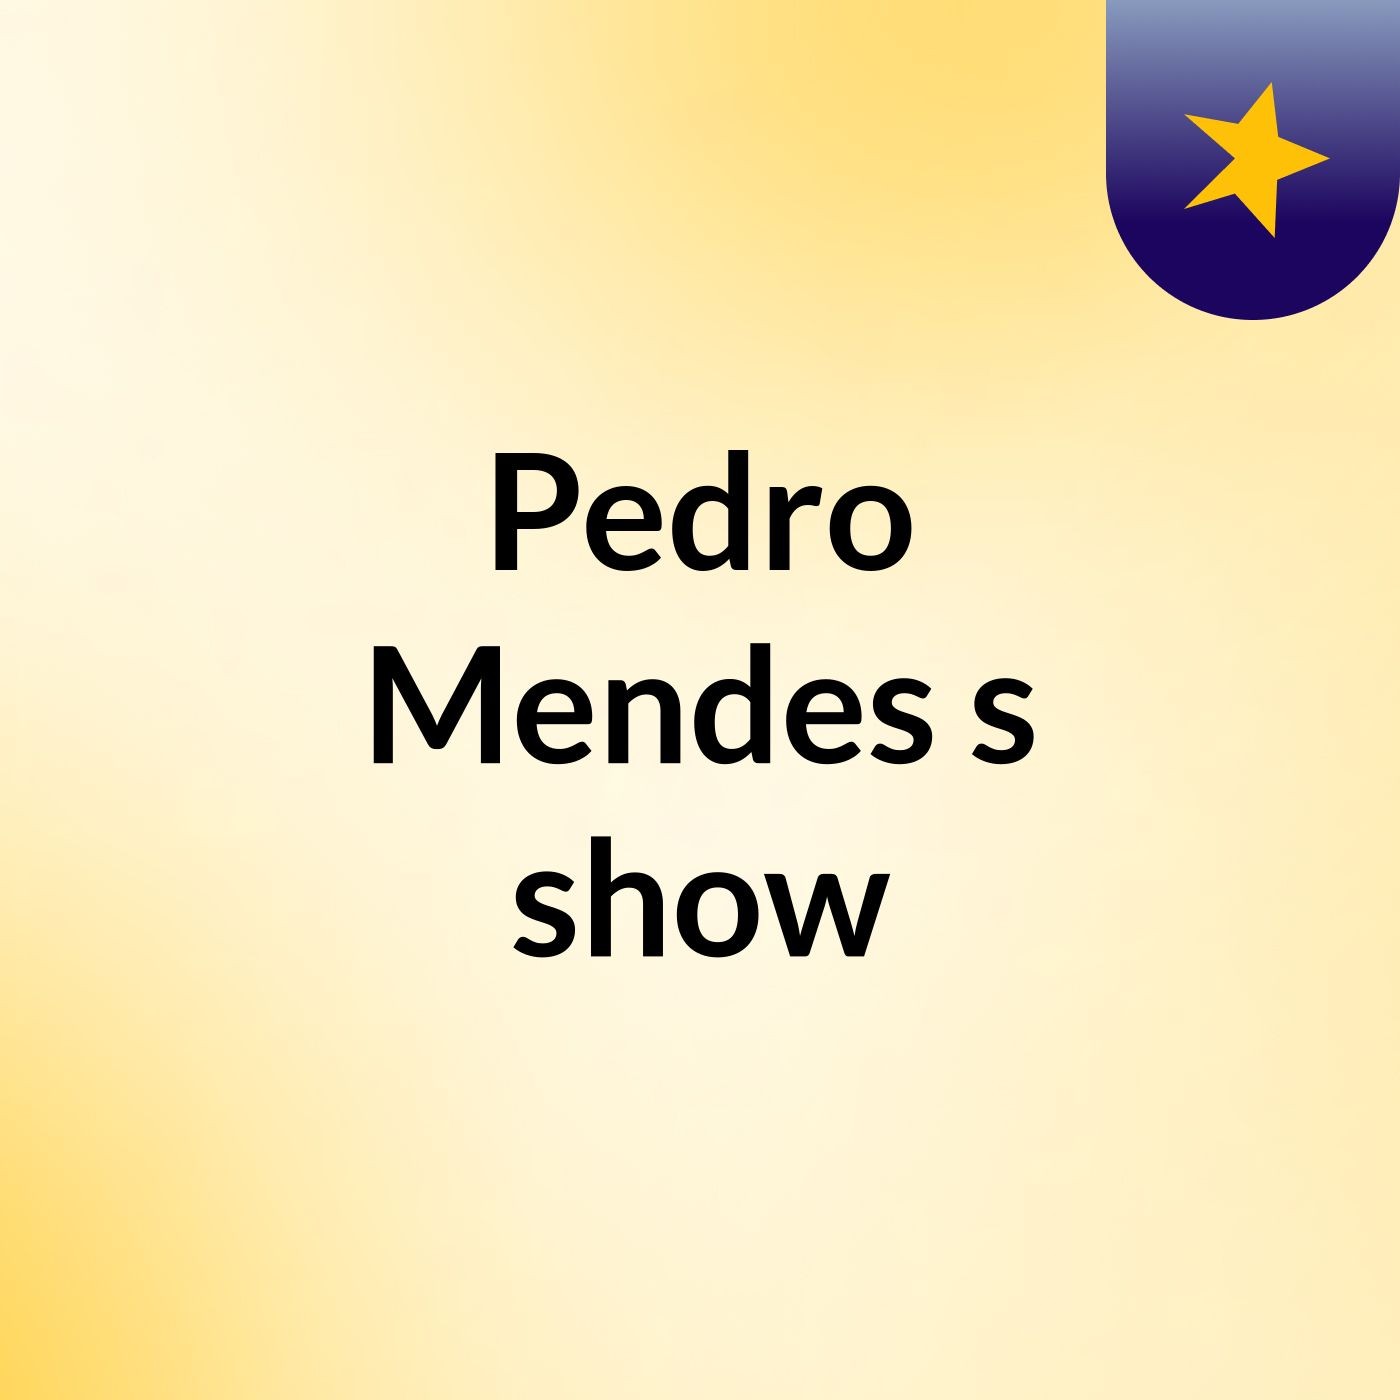 Pedro Mendes's show